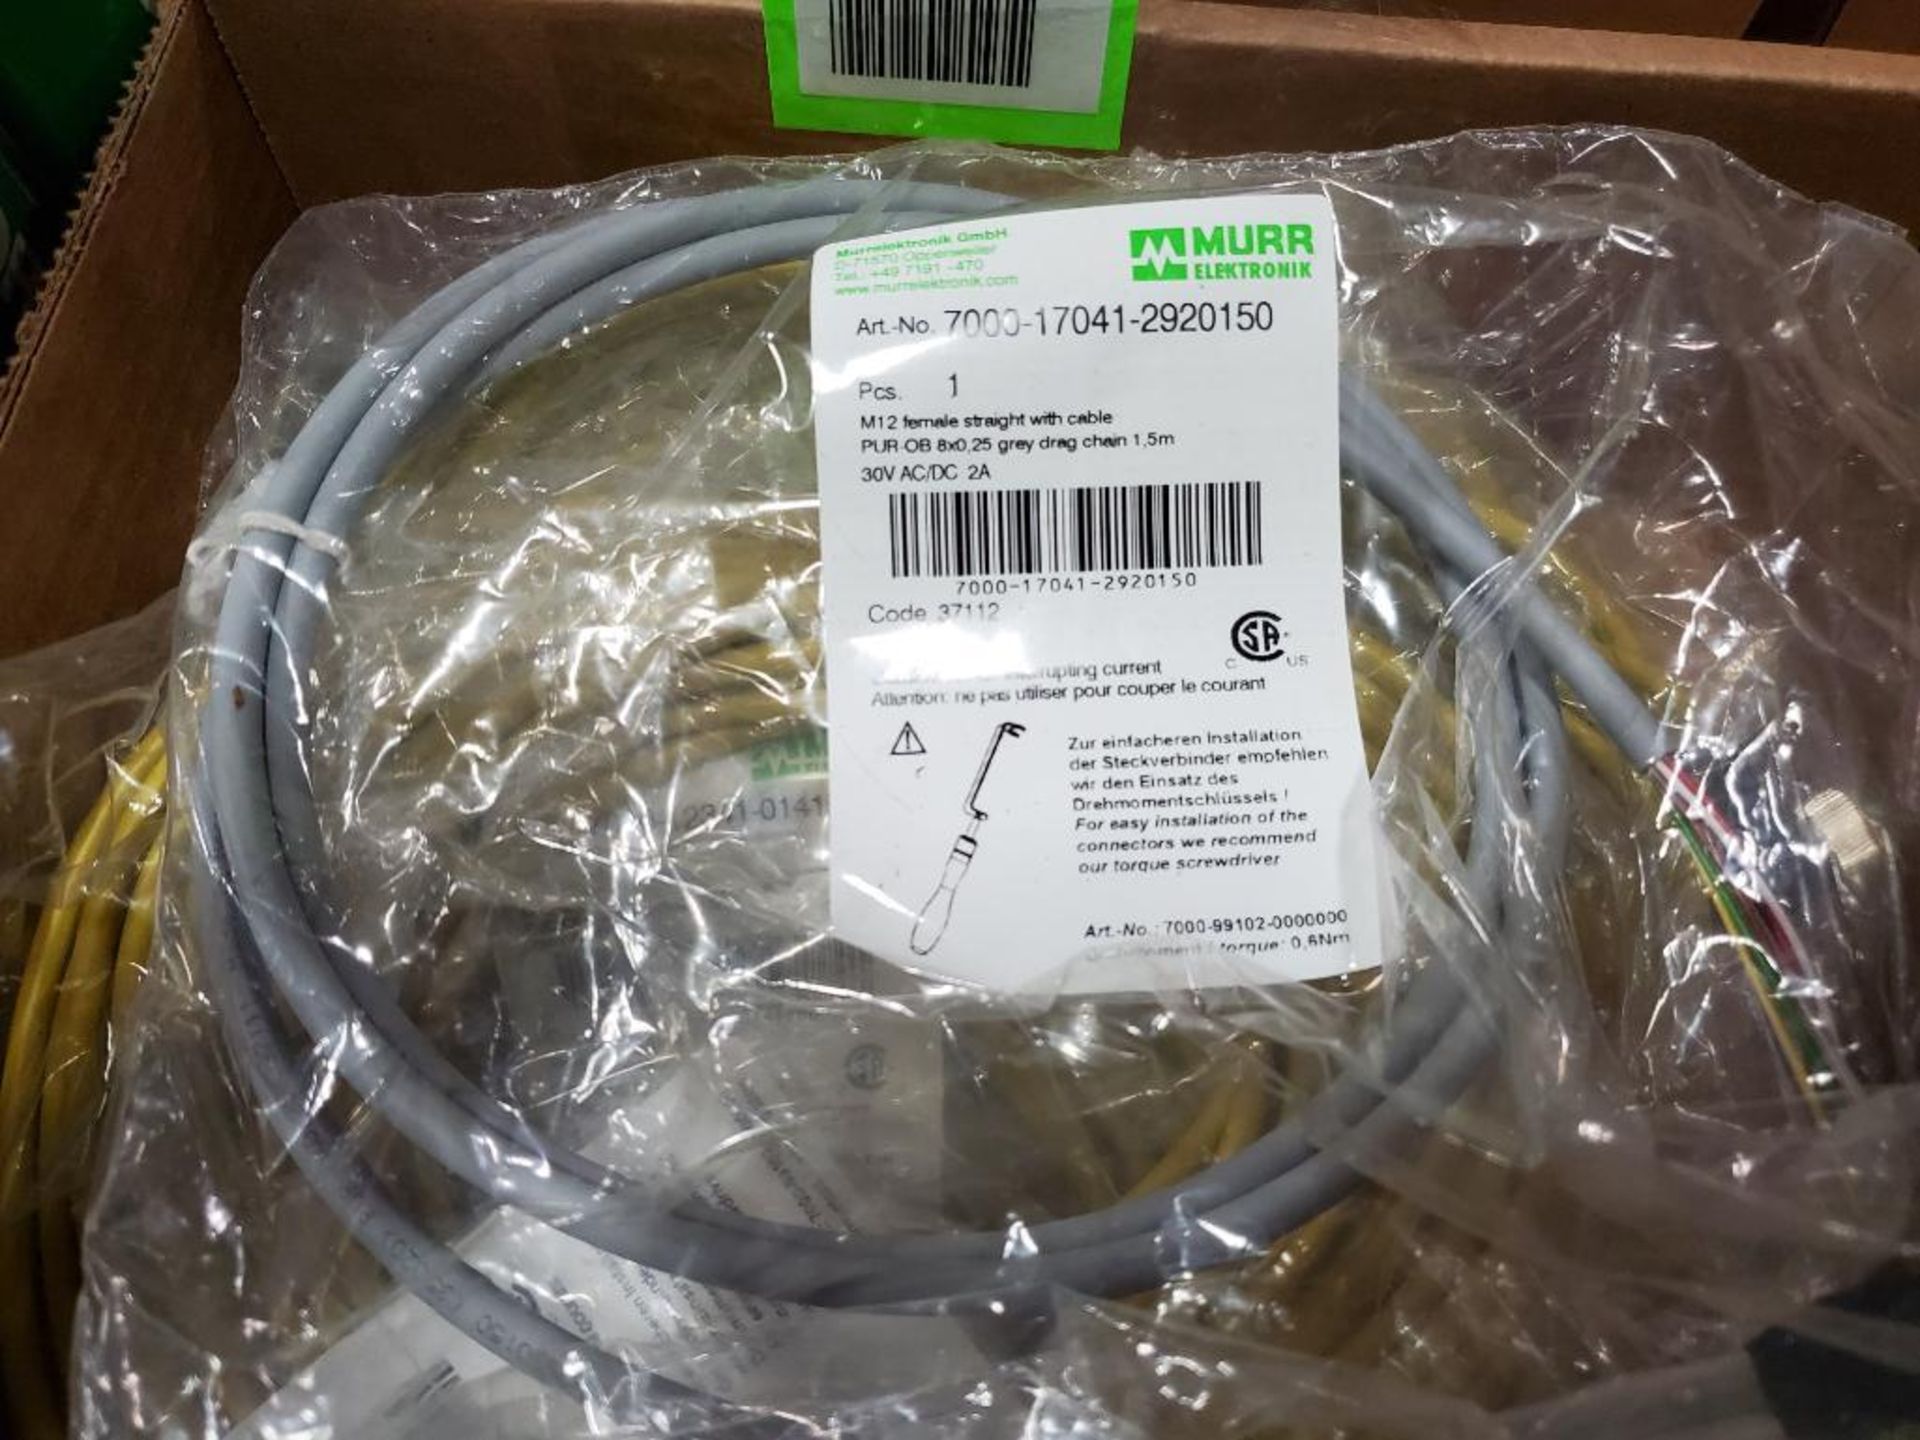 Assorted Murr Elektronik electrical. New in packaging. - Image 3 of 5